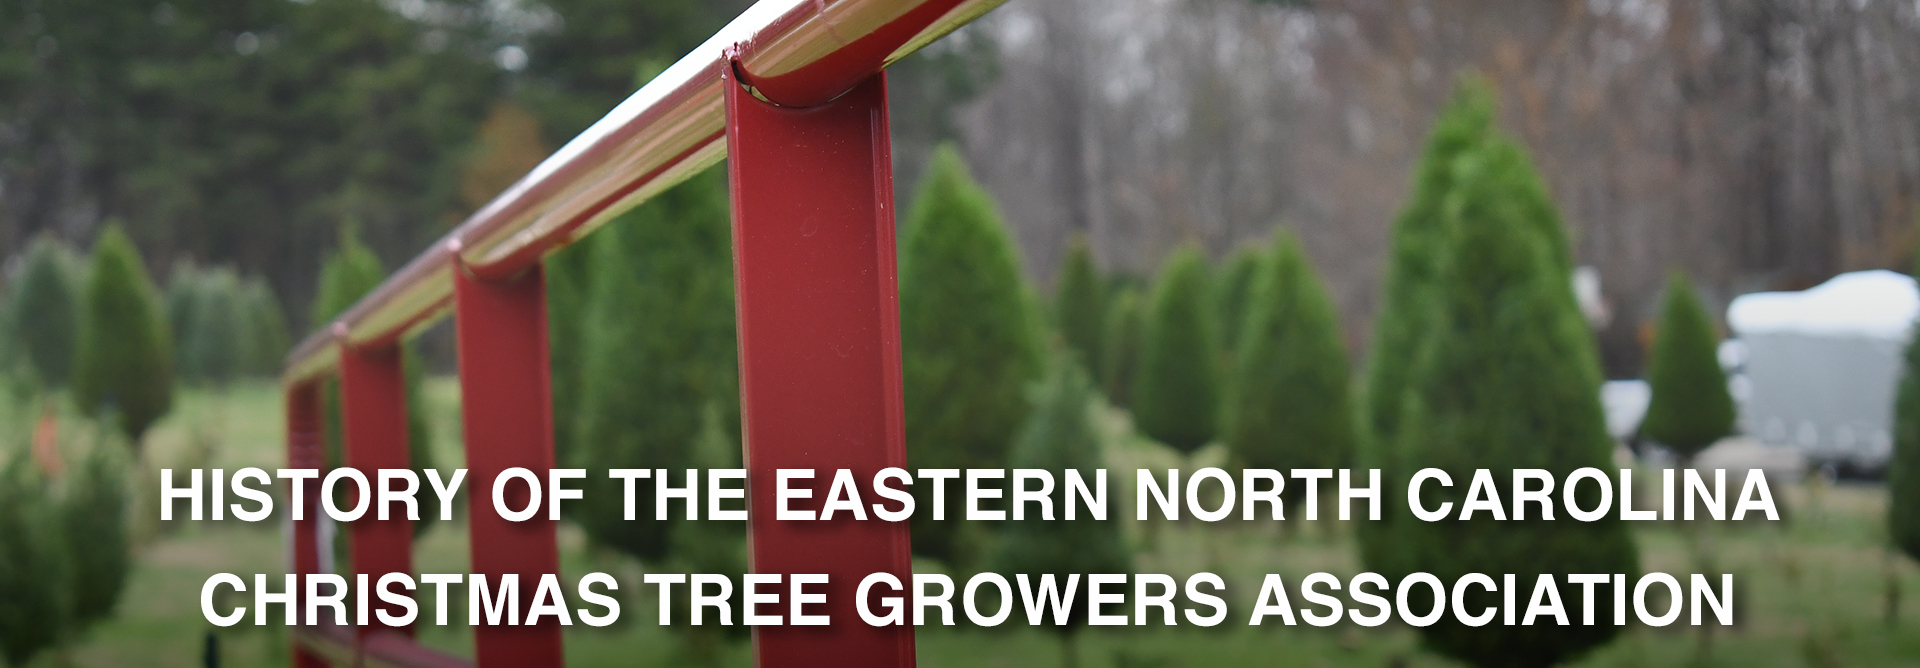 ENCCTGA History of Christmas Trees in Eastern North Carolina